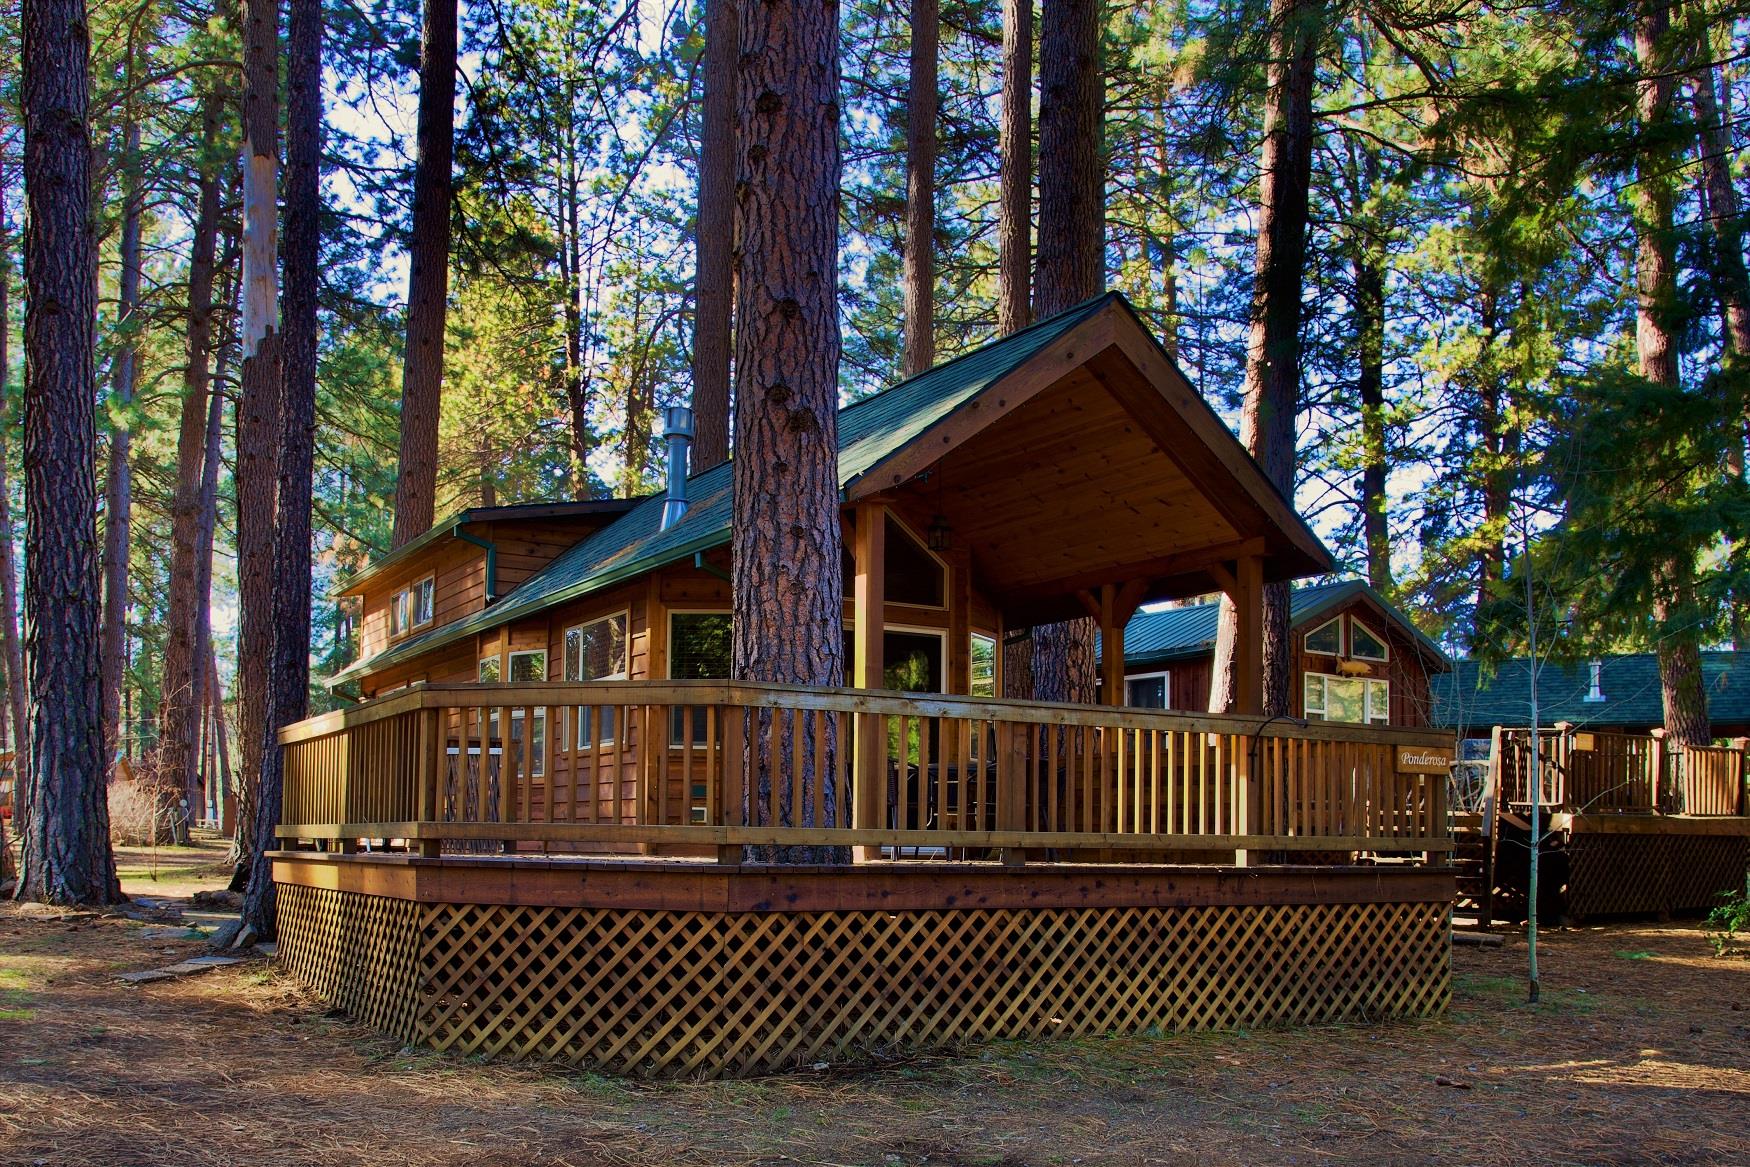 Ponderosa Cabin at Cold Springs Resort in Camp Sherman, Oregon